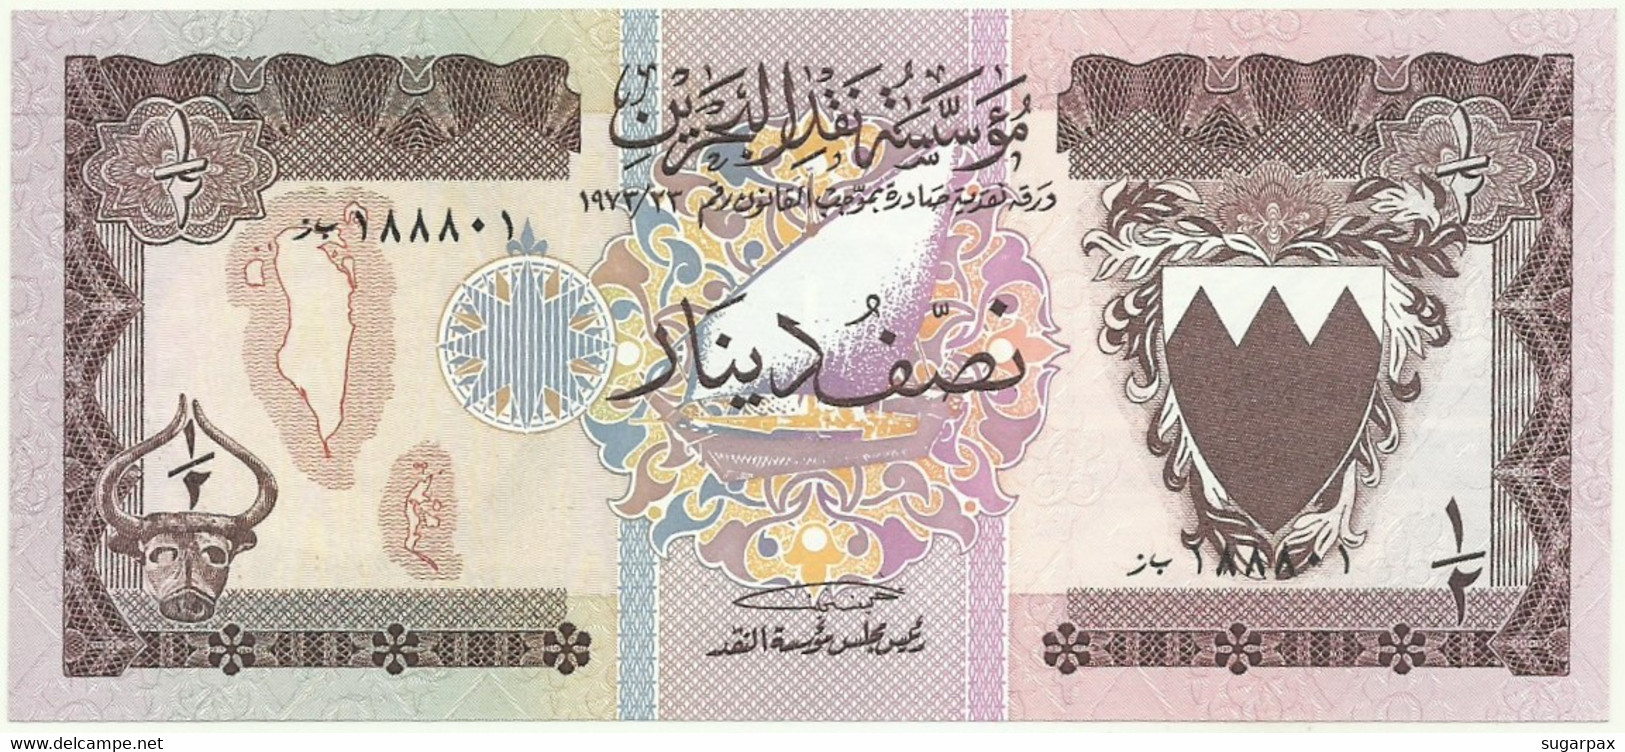 Bahrain - 1/2 Dinar - L. 1973 - Pick 7 - Unc. - Bahrain Monetary Agency - Bahrein